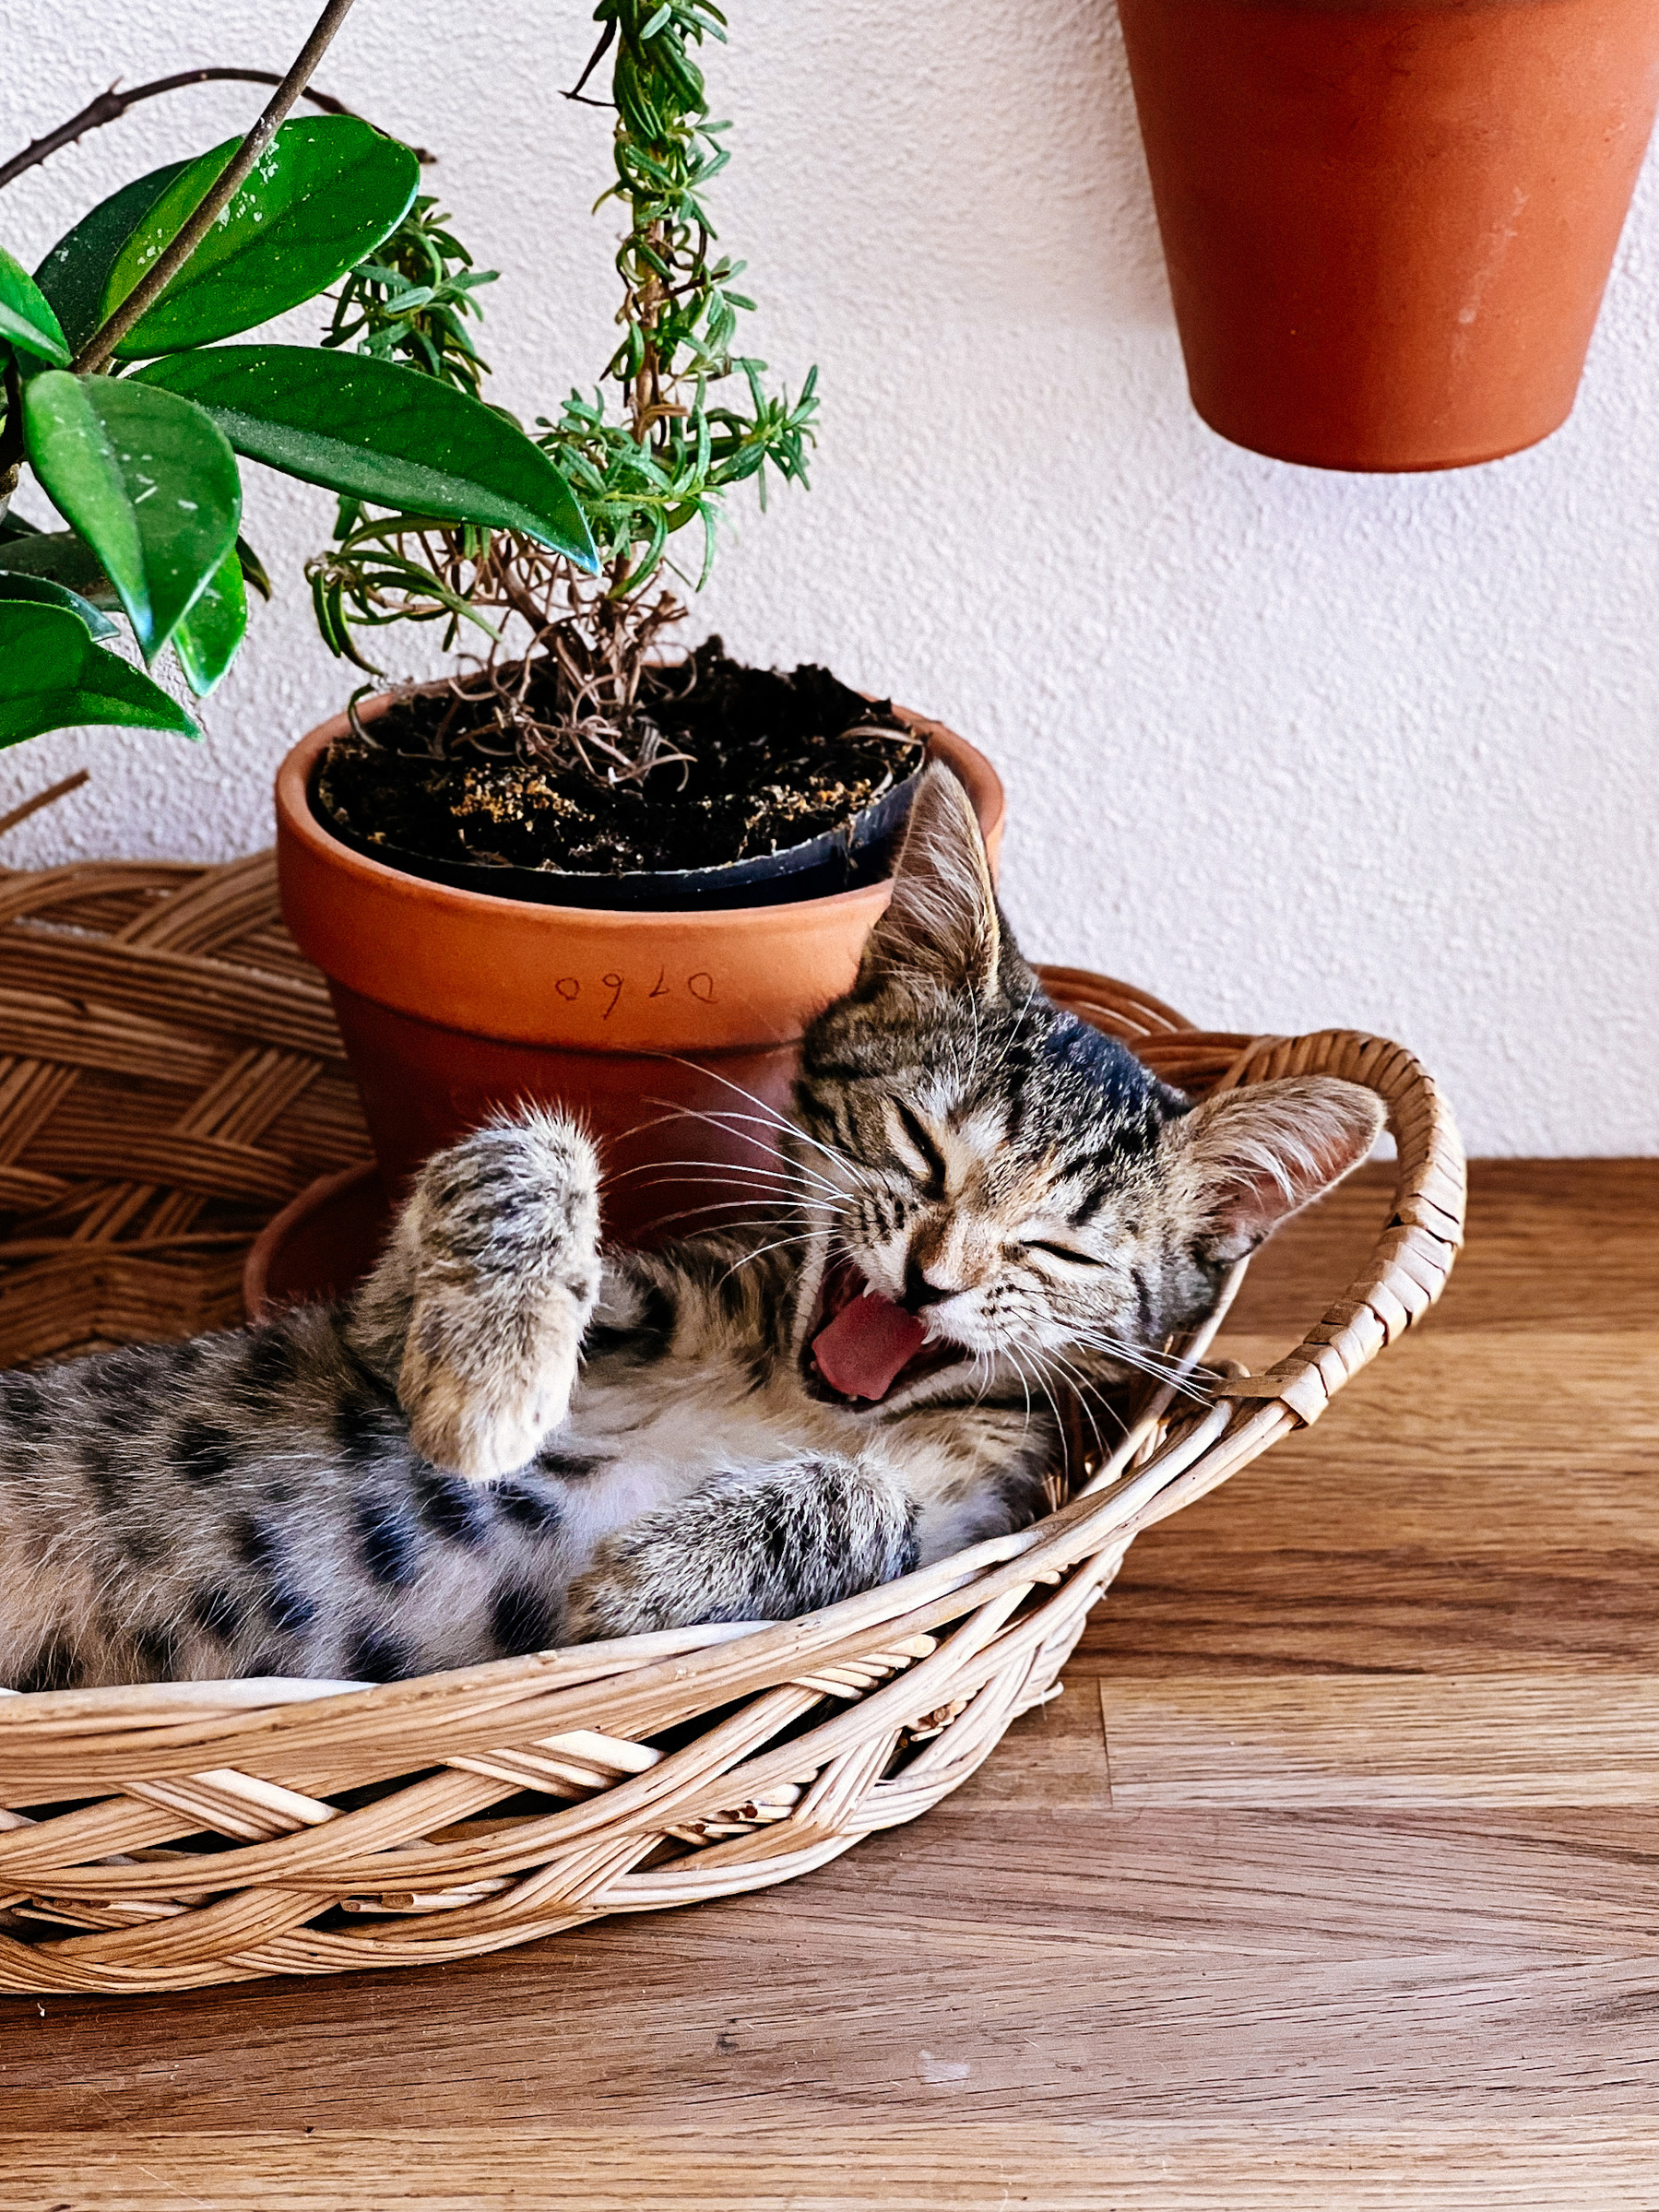 a kitten yawning